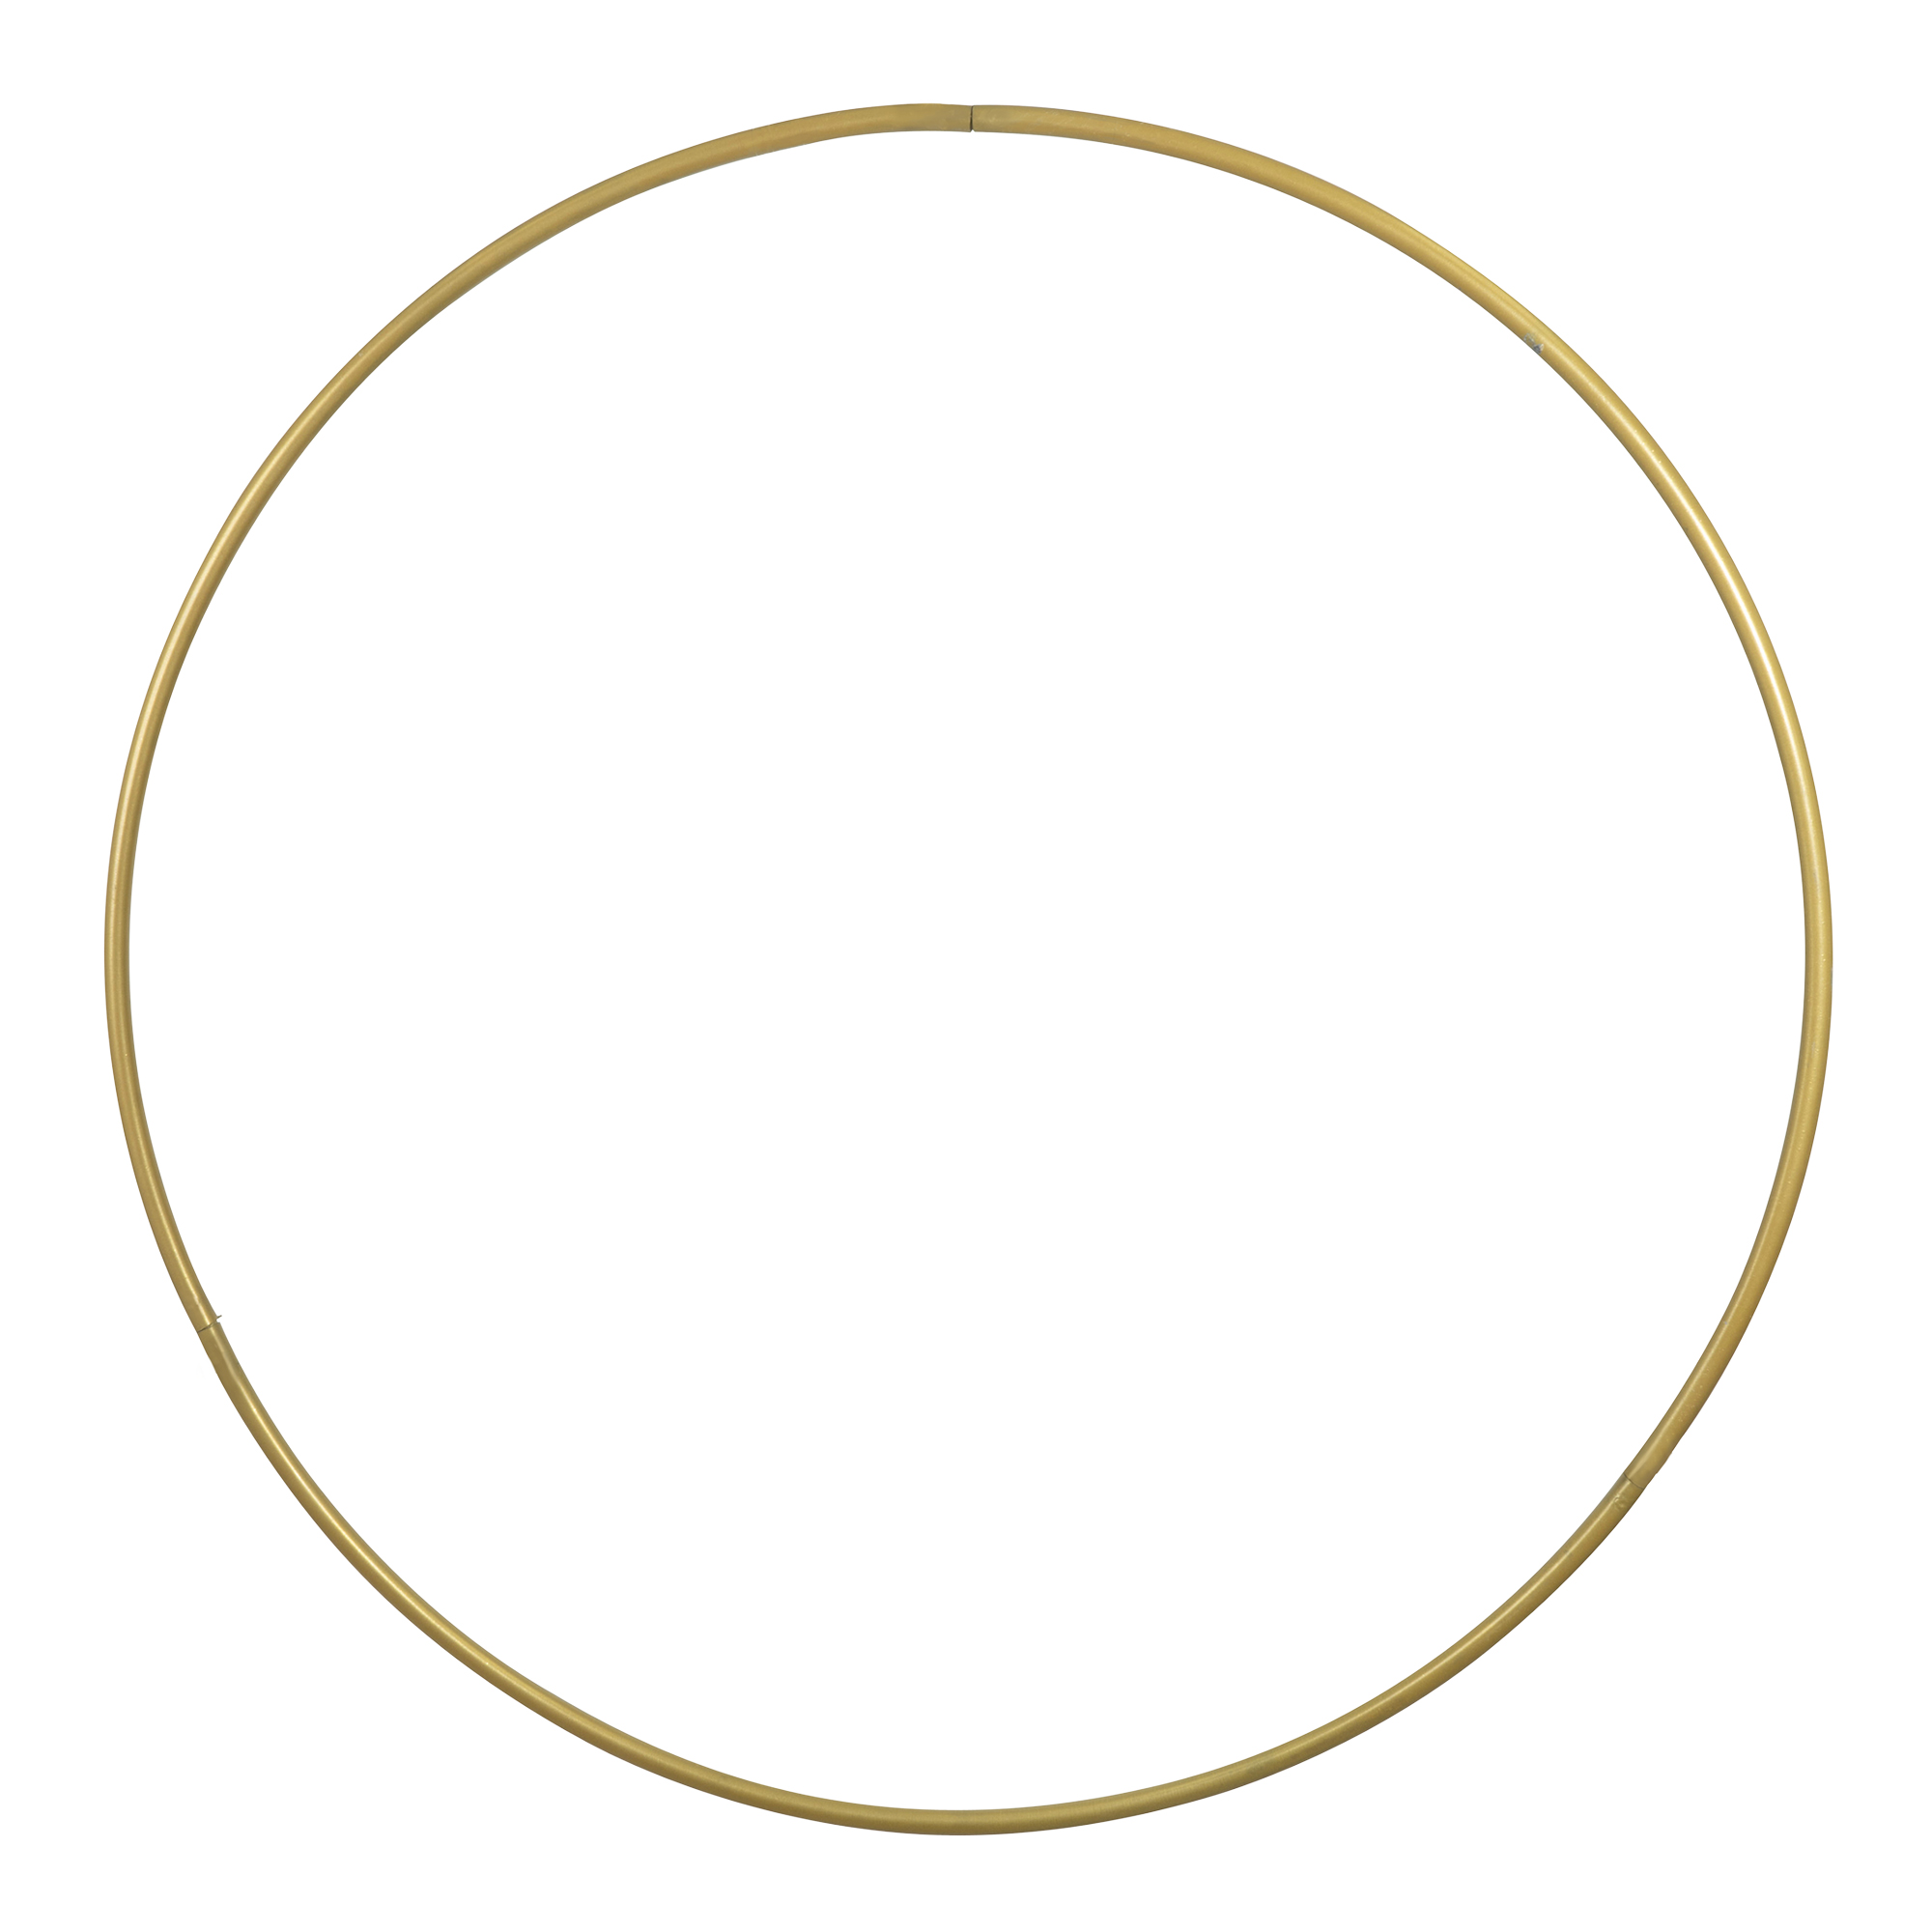 Metal Wreath Ring 30" - Gold